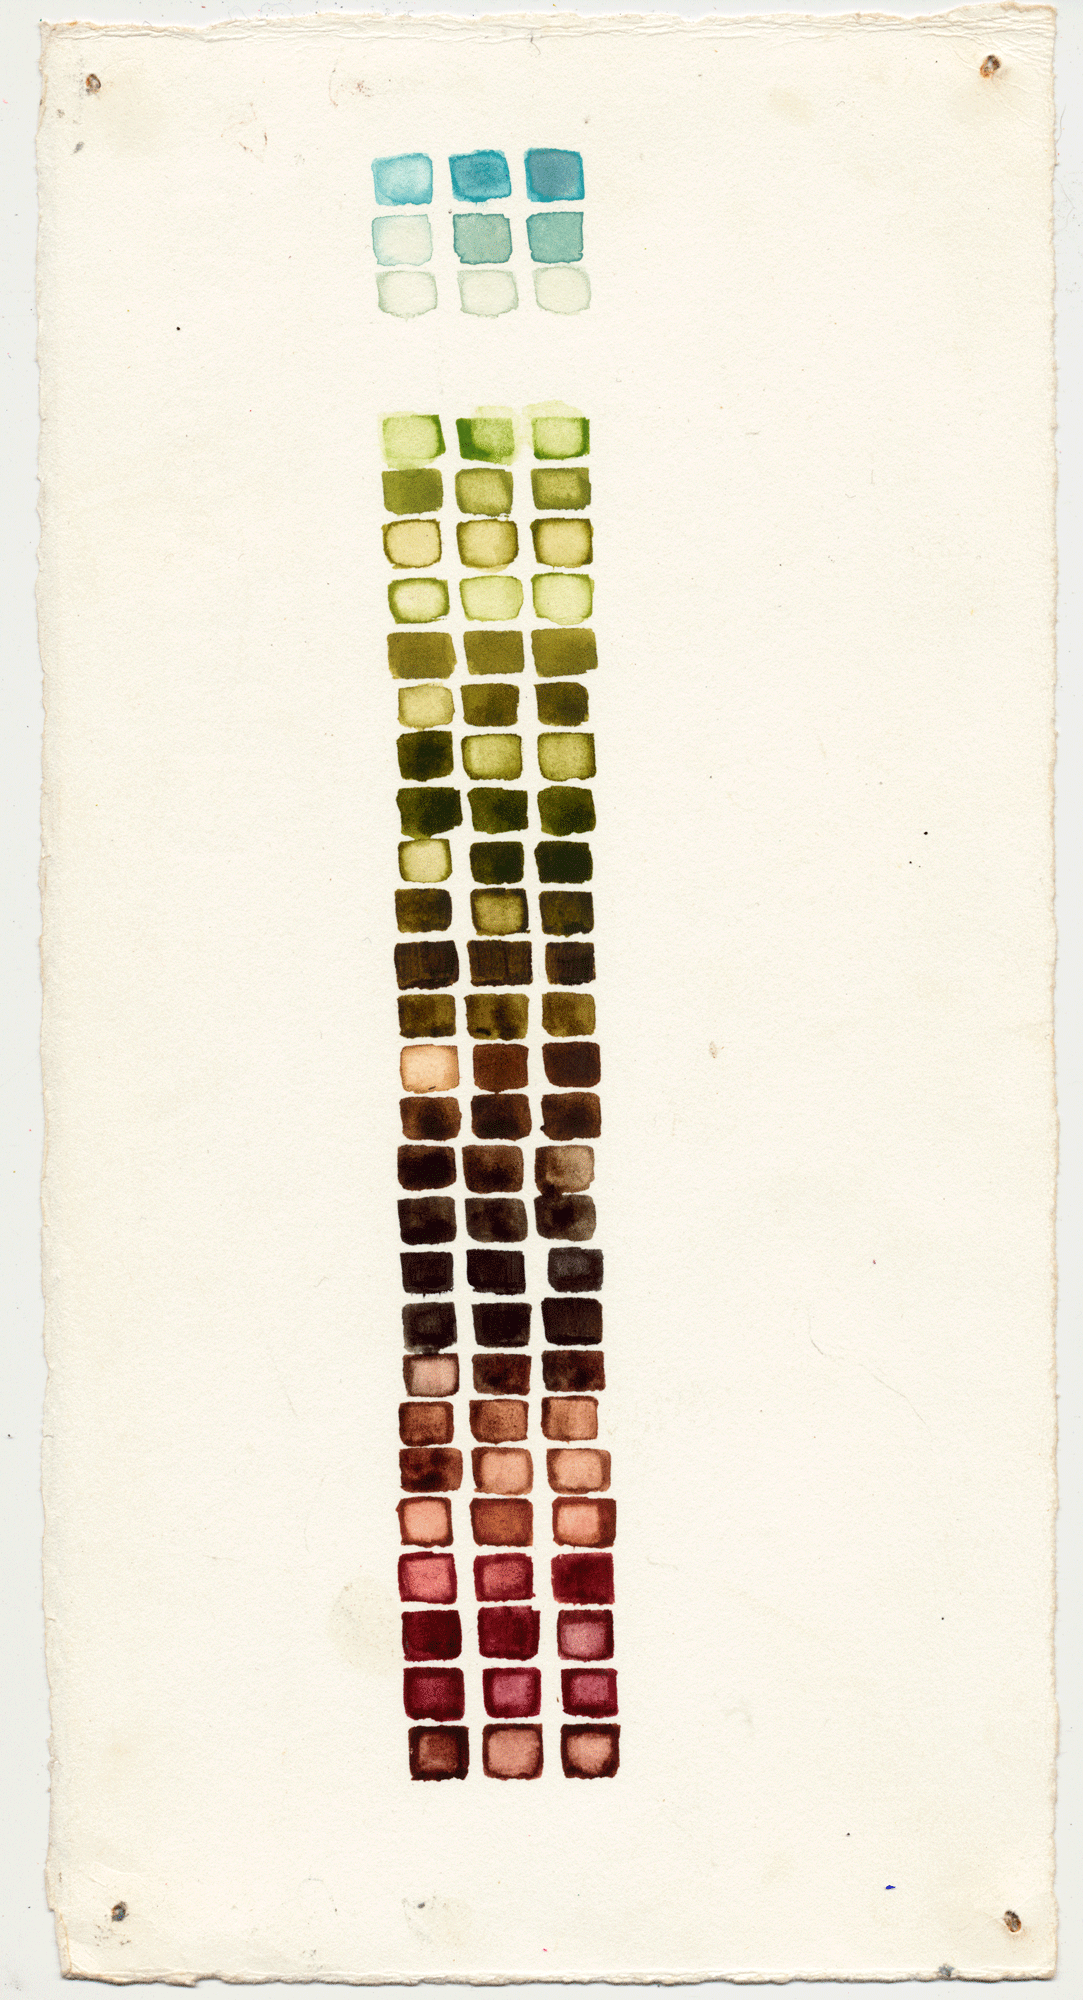  ZAMBIA008, 11" X 6”, watercolor on paper, 2000  